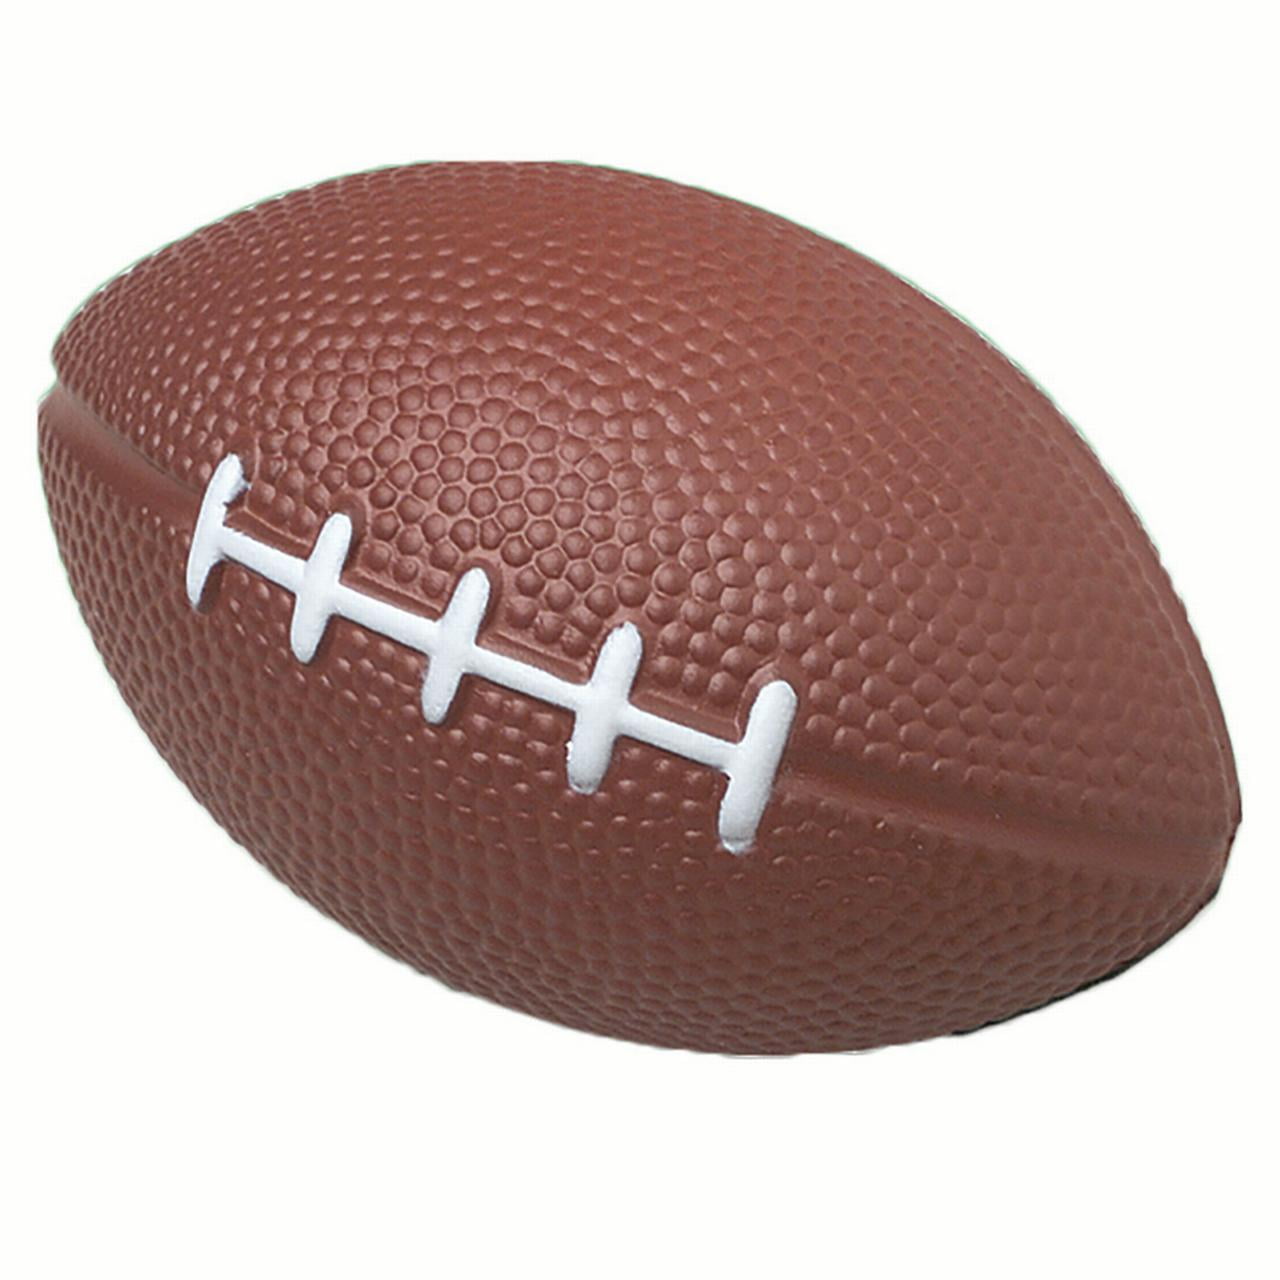 mini football toy